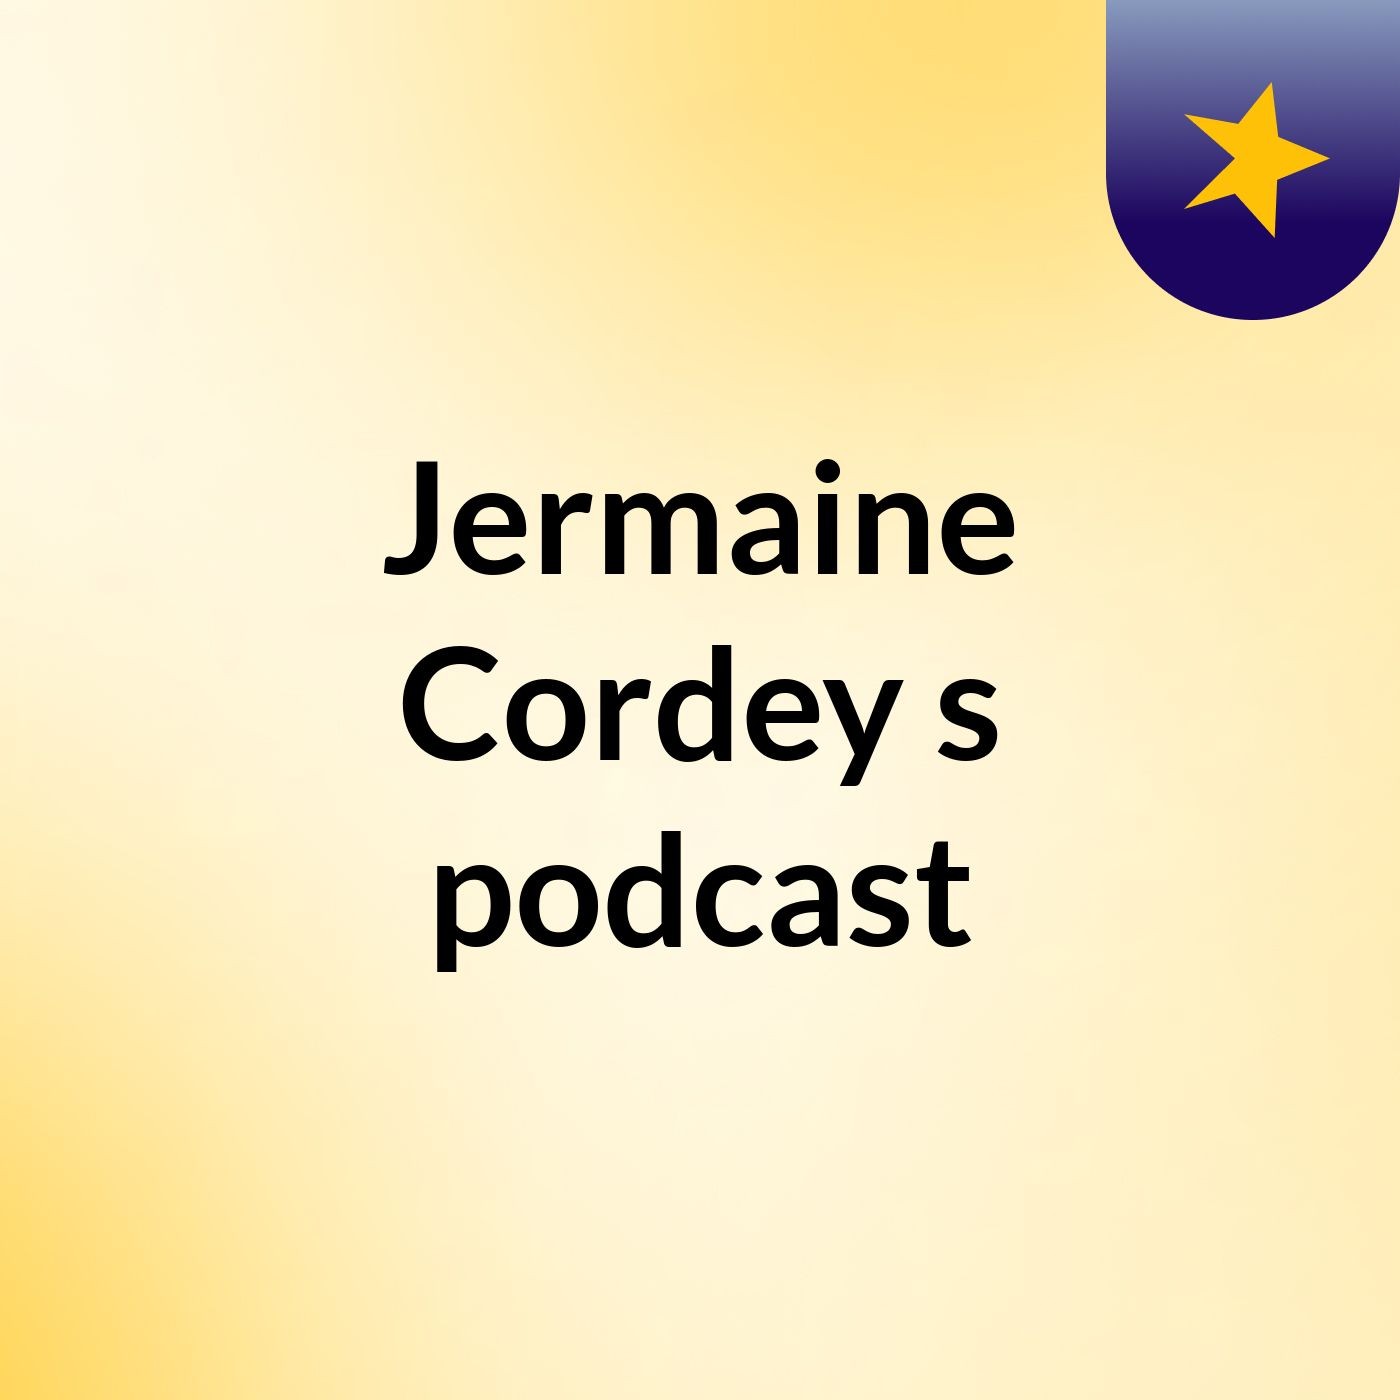 Episode 3 - Jermaine Cordey's podcast